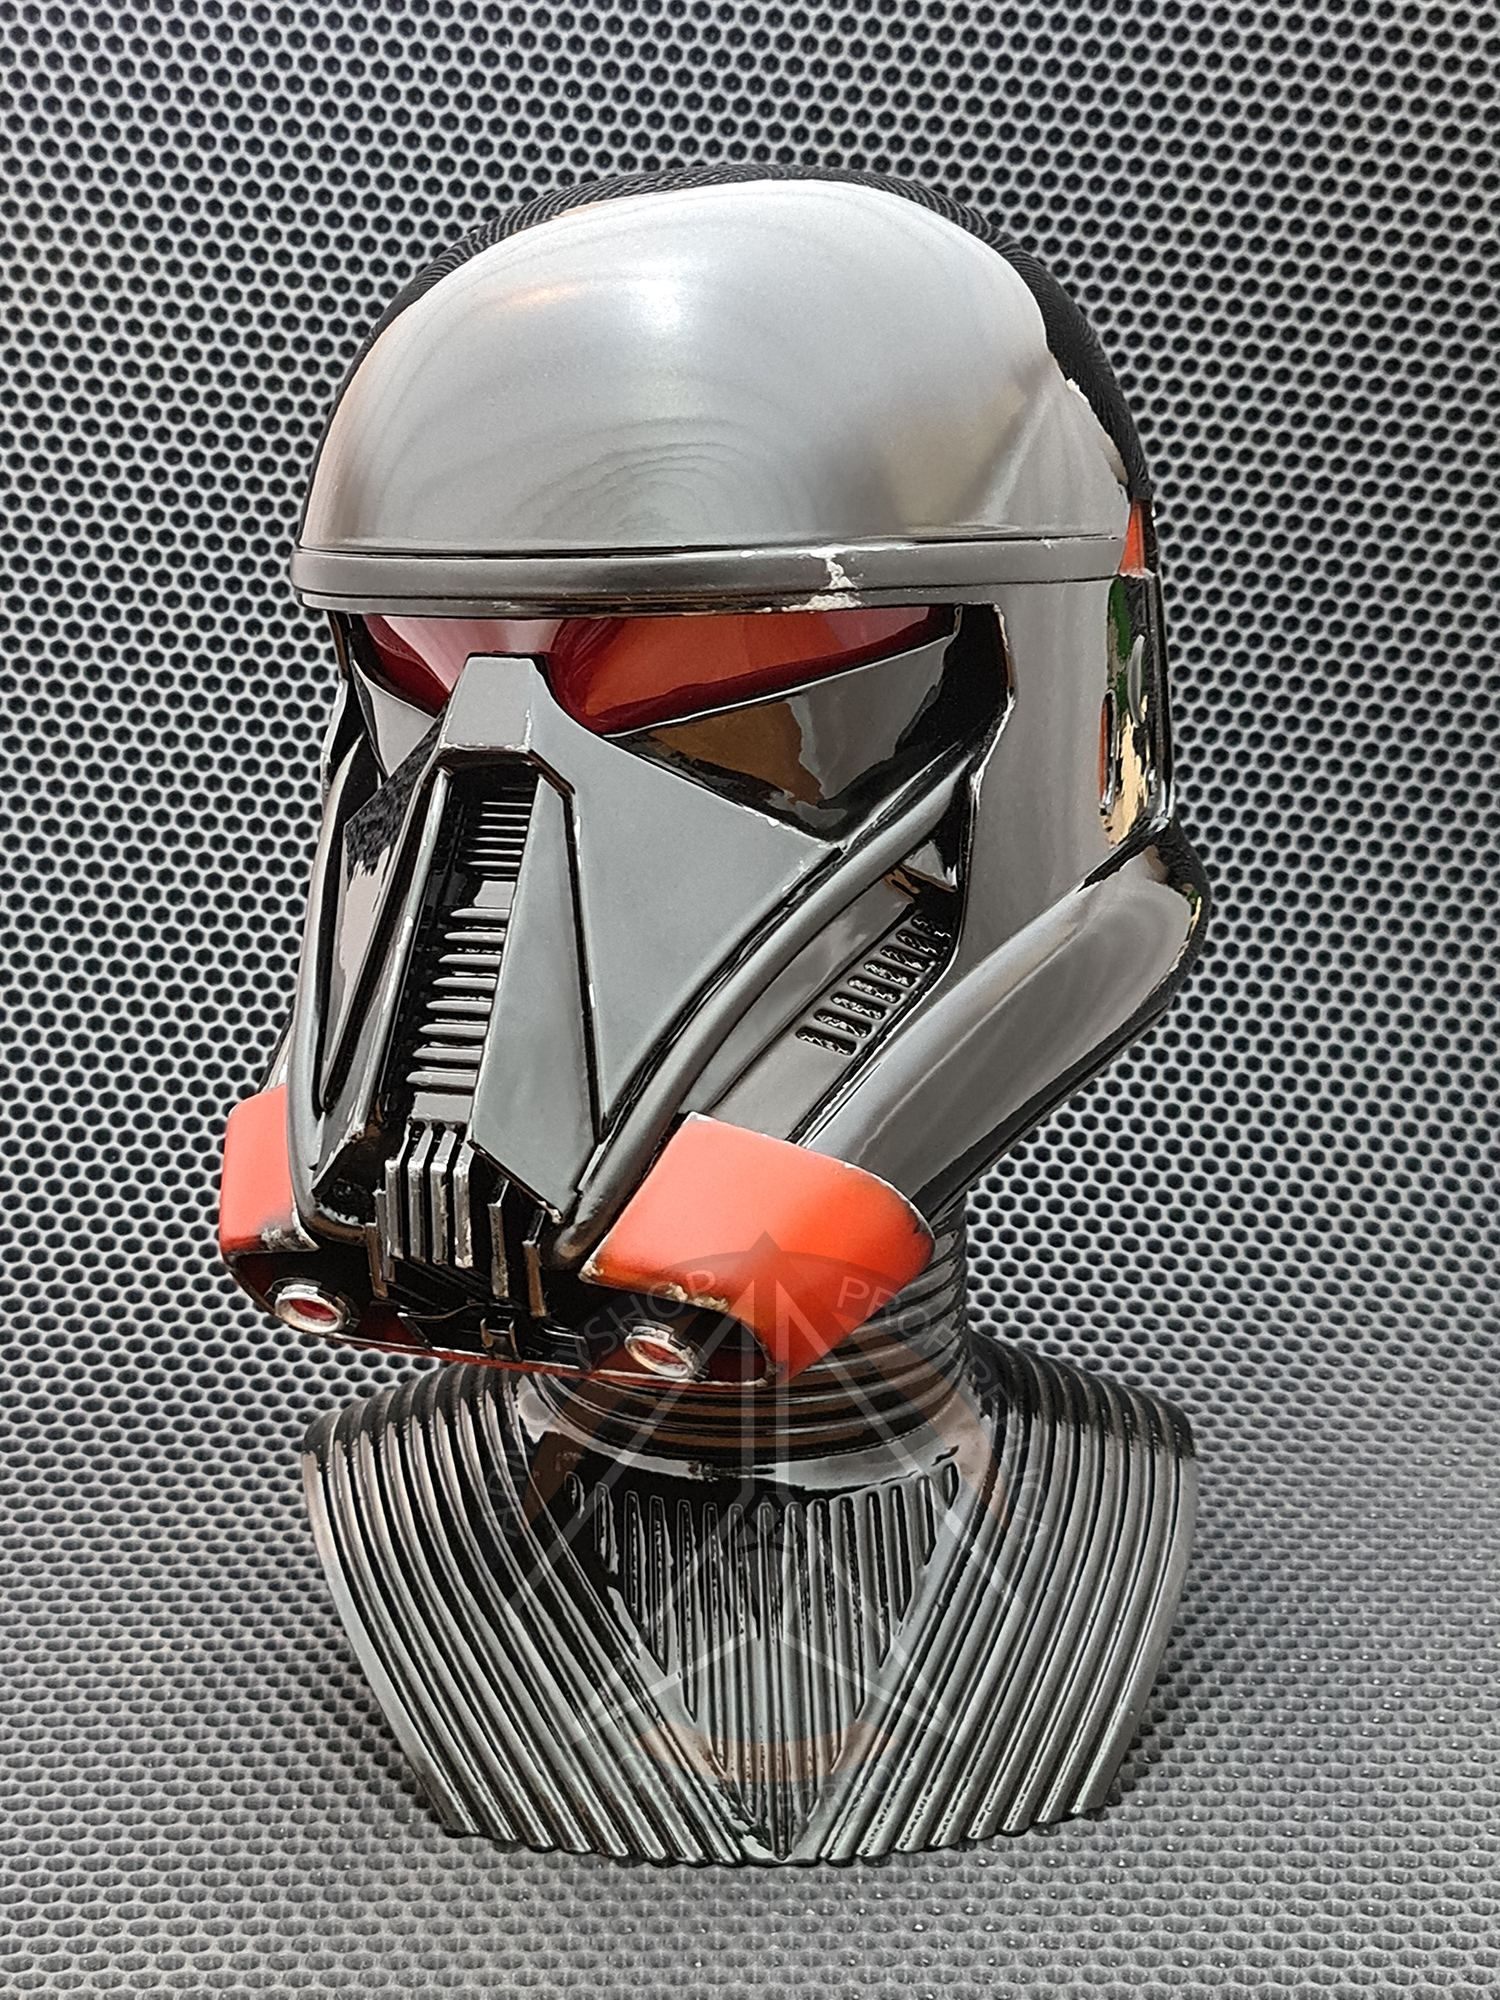 ASP DARK DeathTrooper helmet